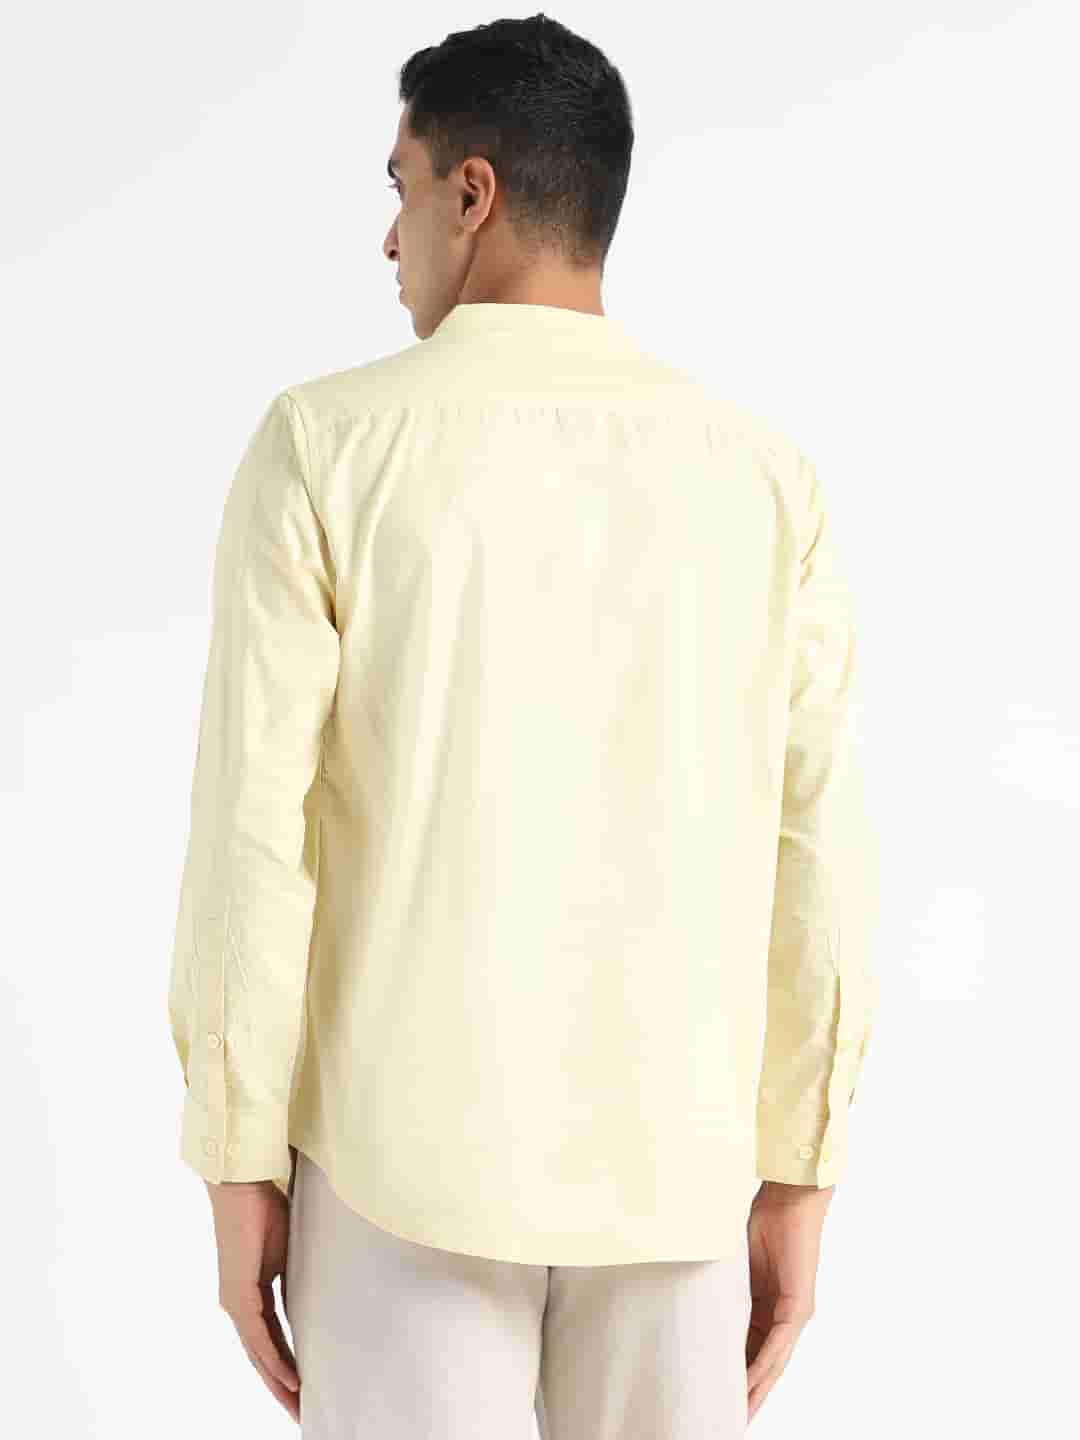 Organic Cotton & Naturally Dyed Mens Round Neck Lemon Yellow Shirt by Livbio